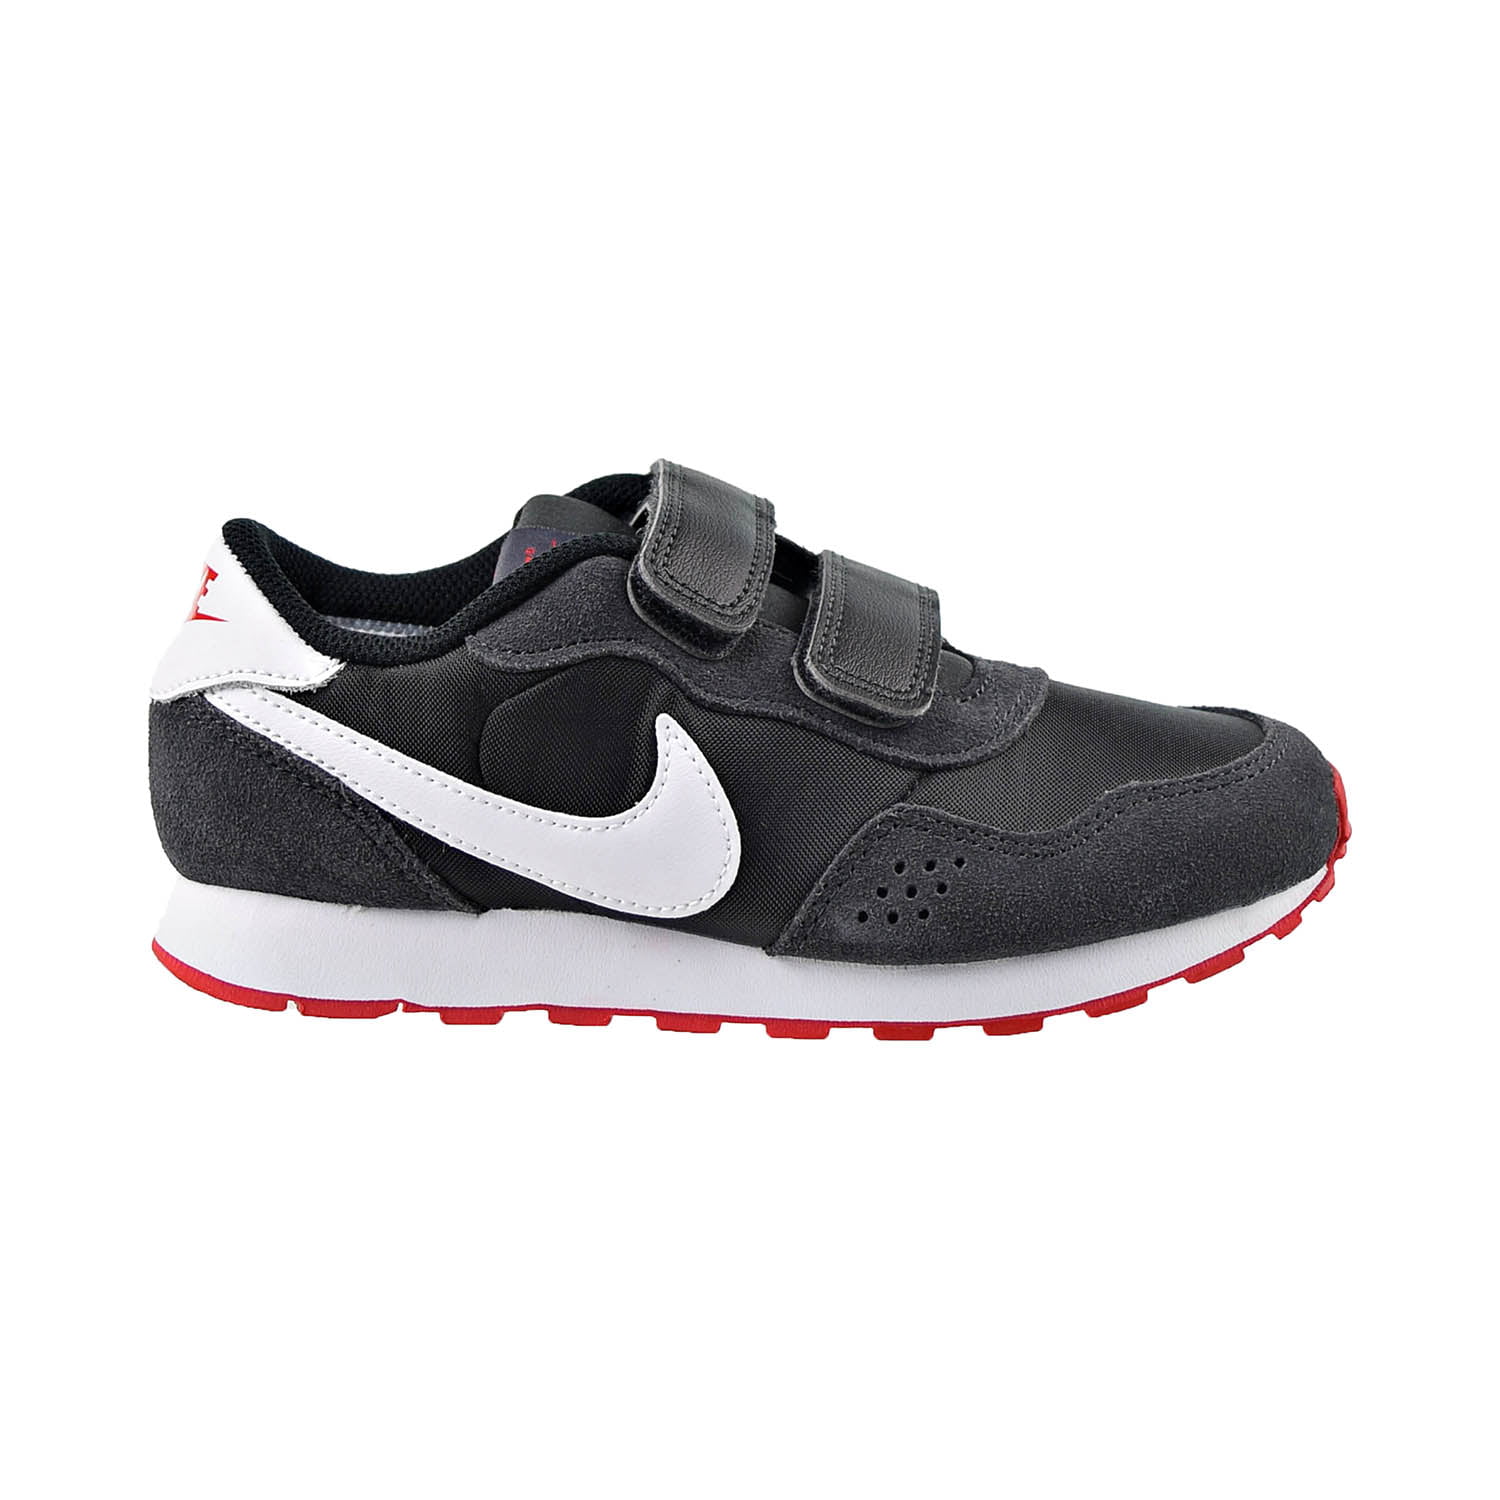 Nike Valiant Little Kids' Shoes Black-White-Dark Grey cn8559-016 - Walmart.com